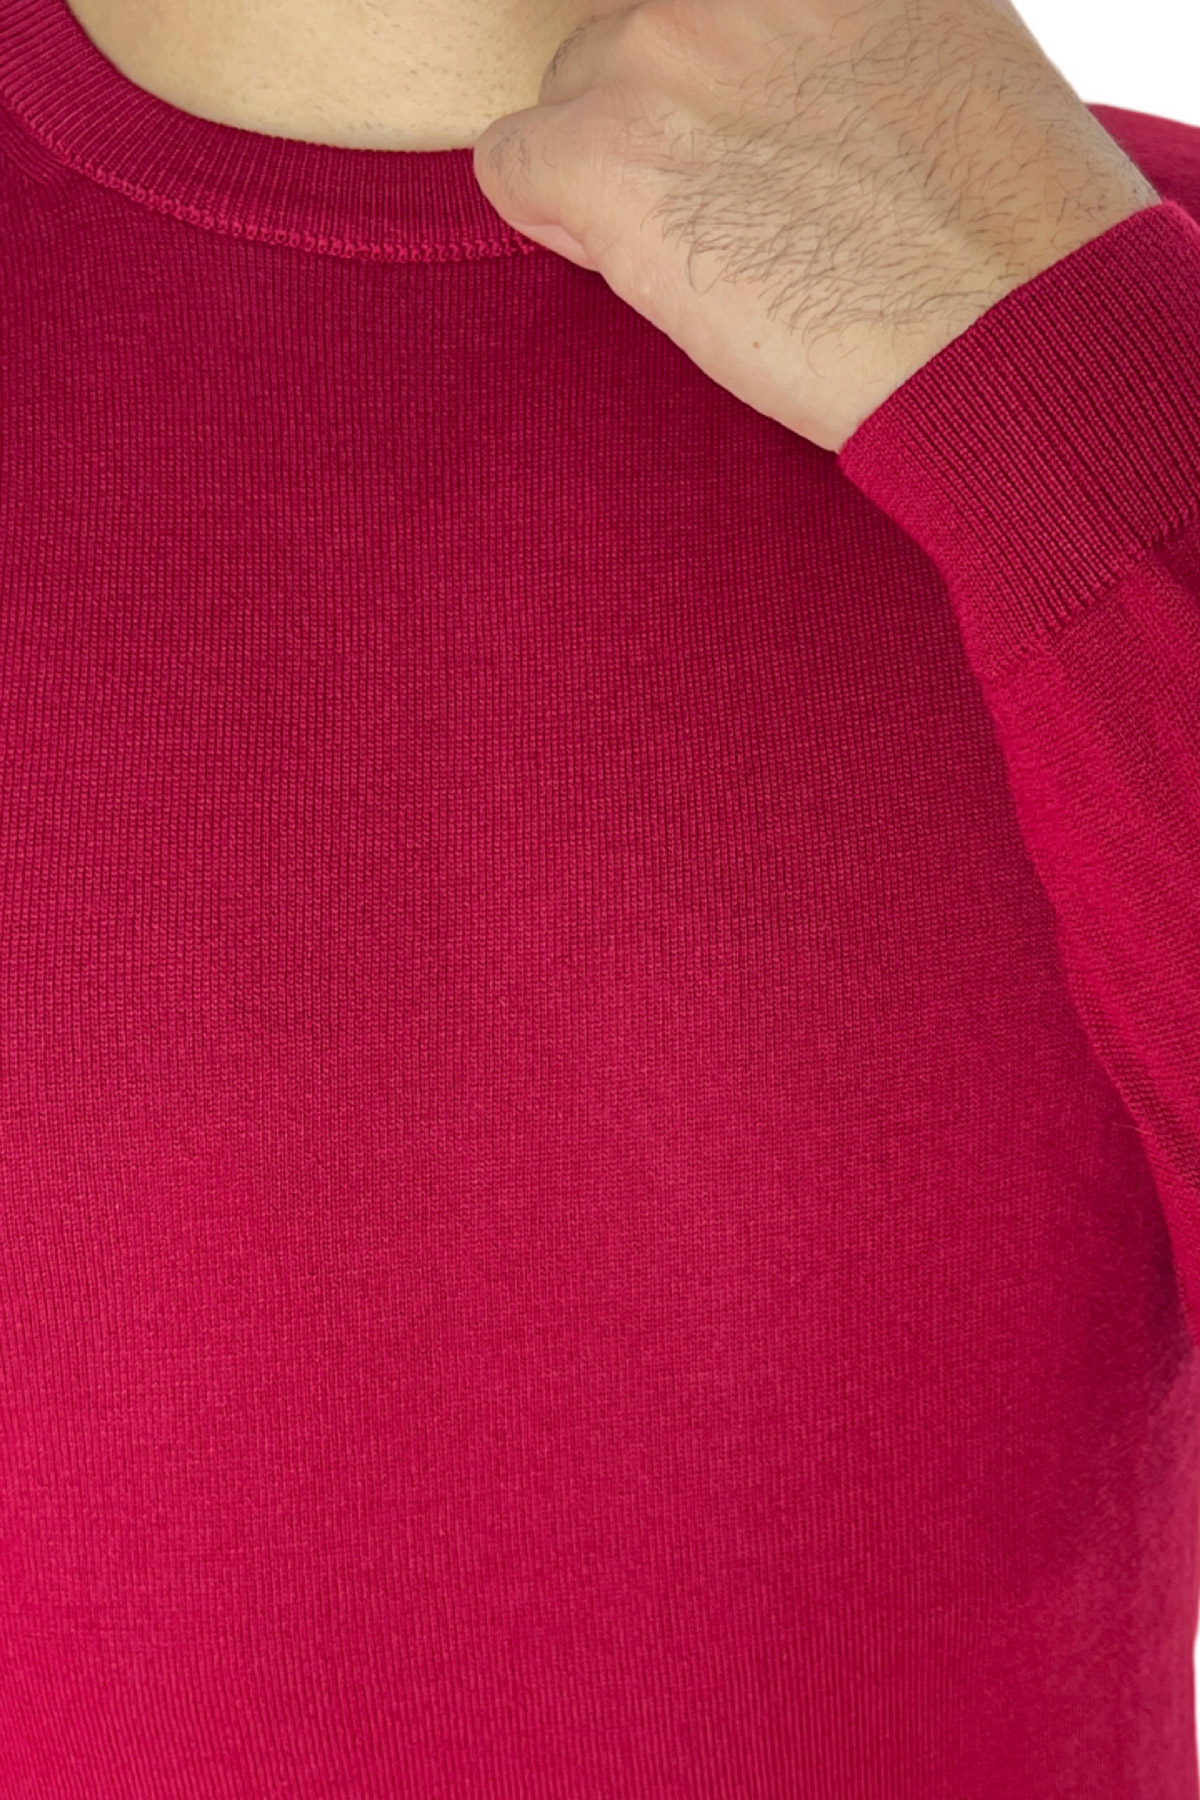 Maglioncino da uomo girocollo rosso in lana merinos slim fit made in italy tinta unita